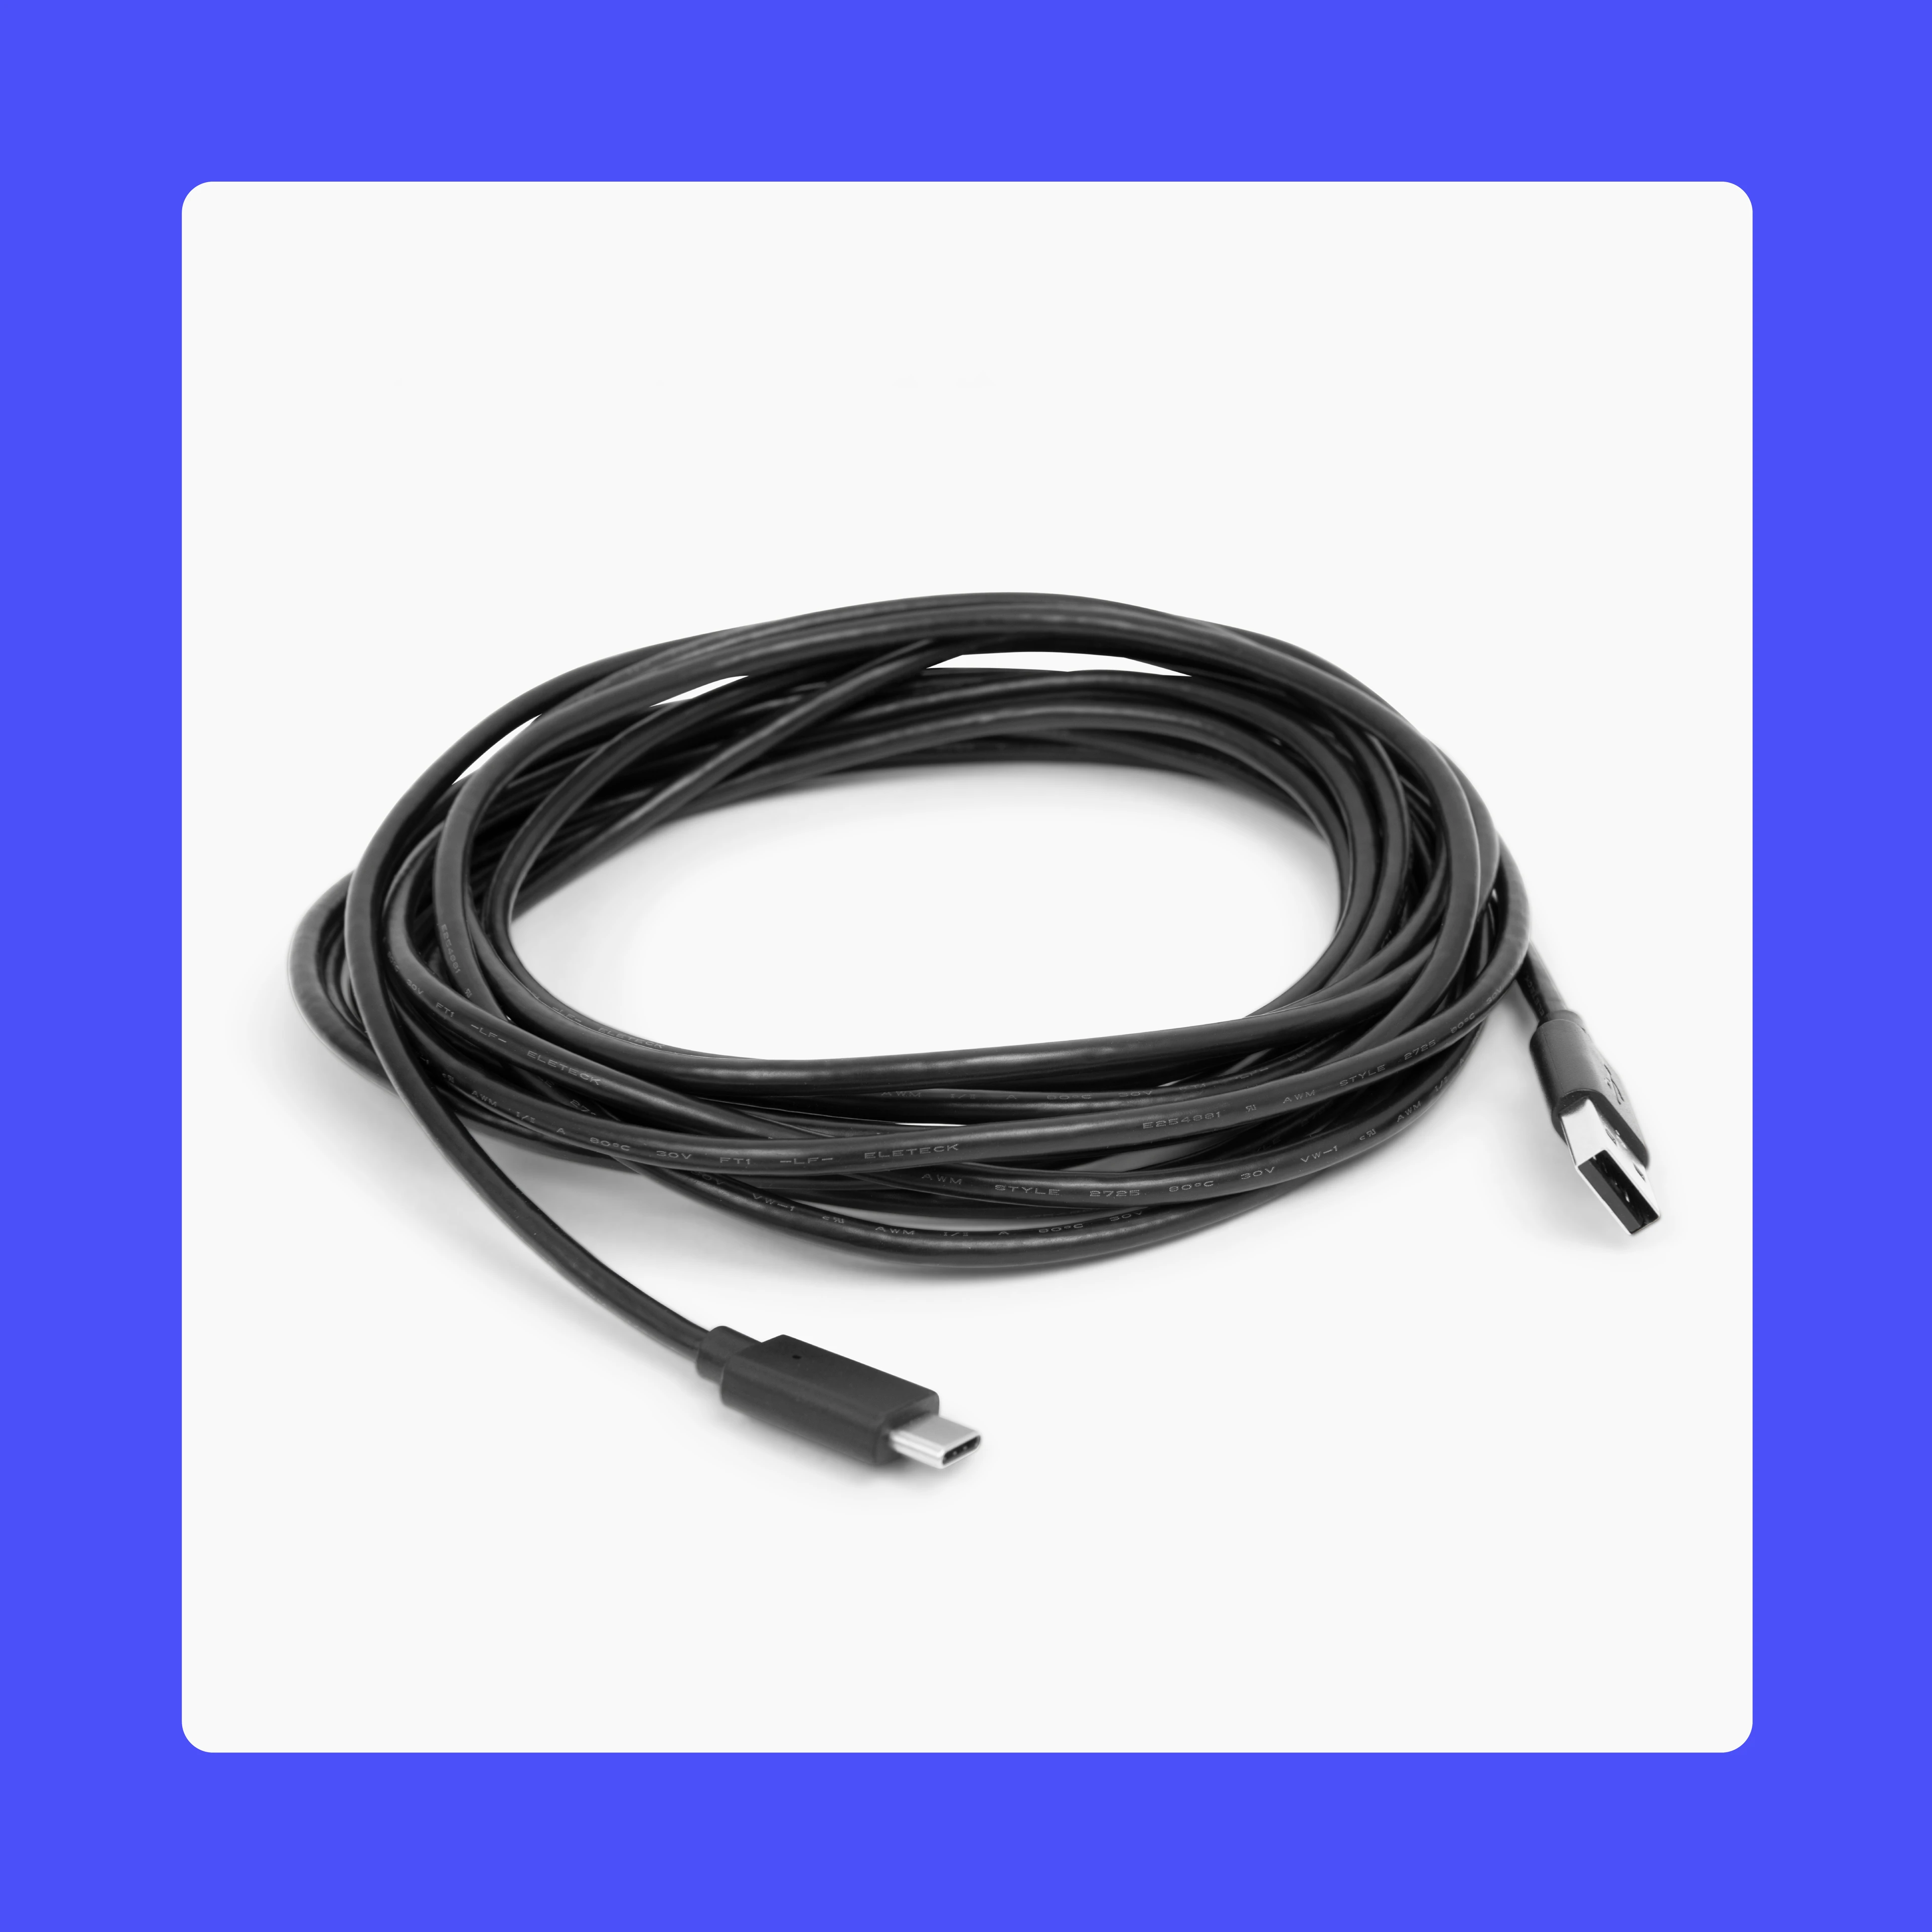 product | accessory | usb c - usb a 16' cord | purple background